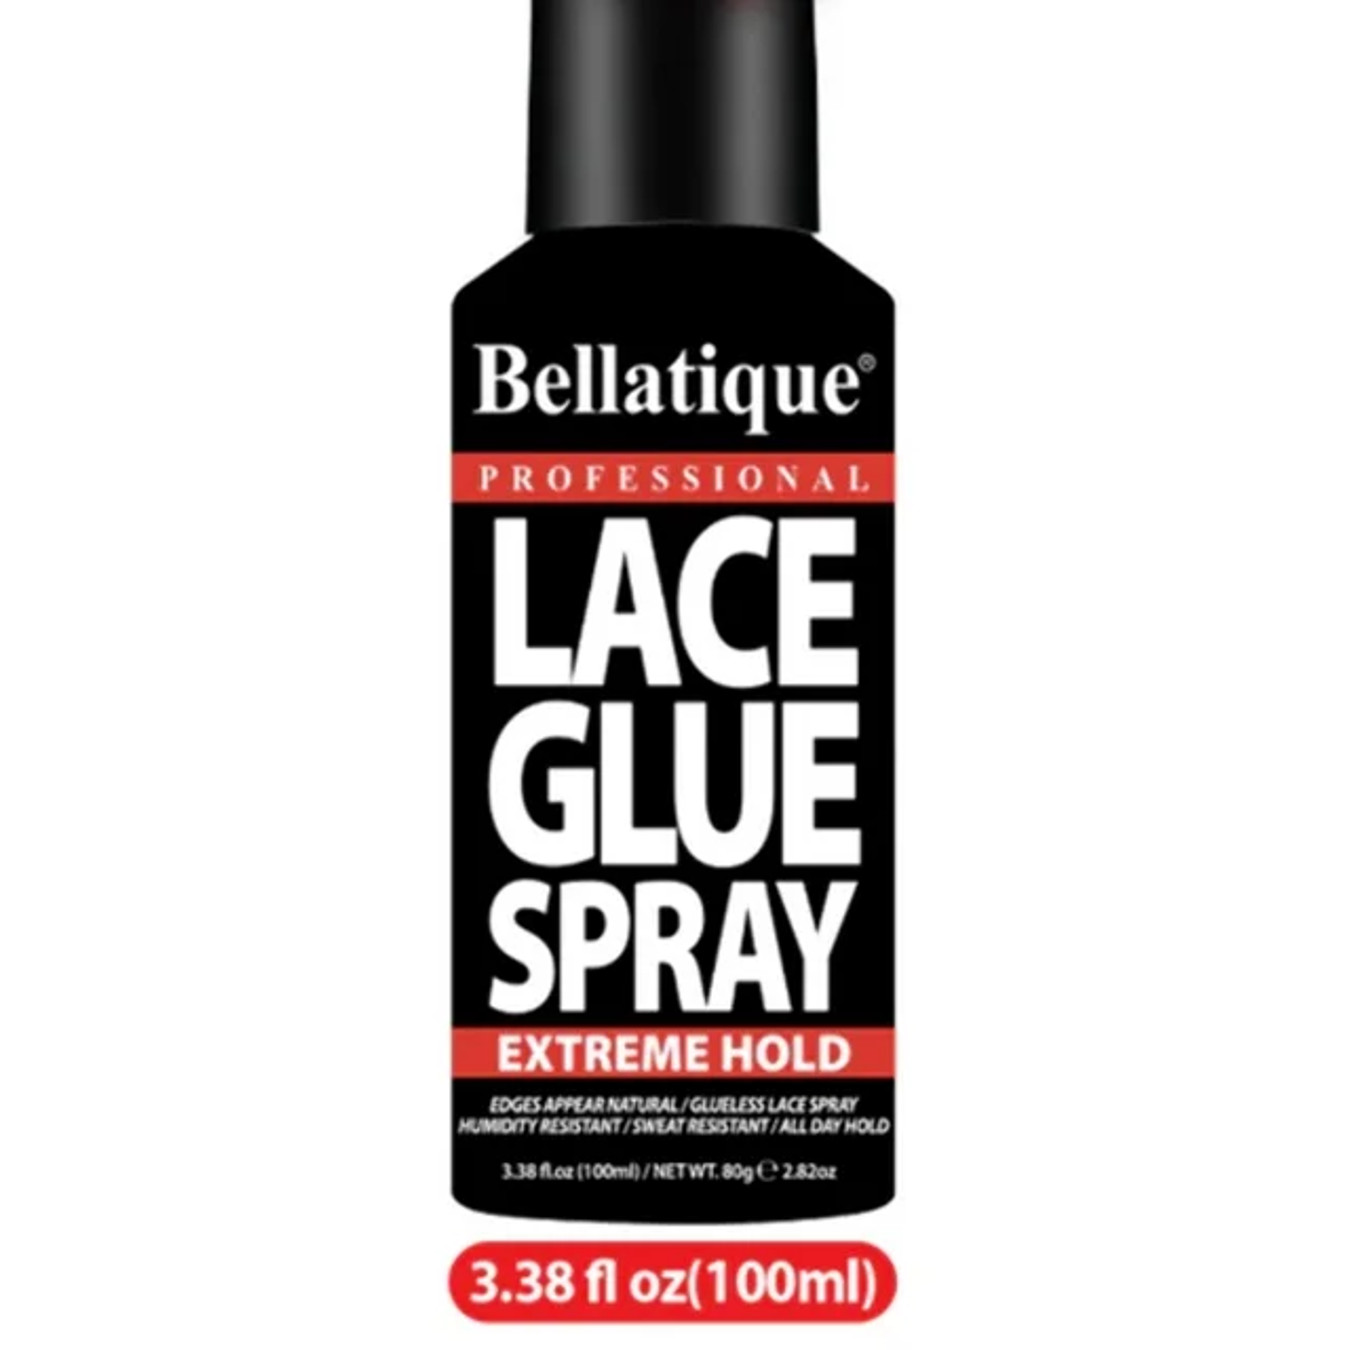 Bellatique Metal Lace Glue Plastic Spray [Extreme Hold]